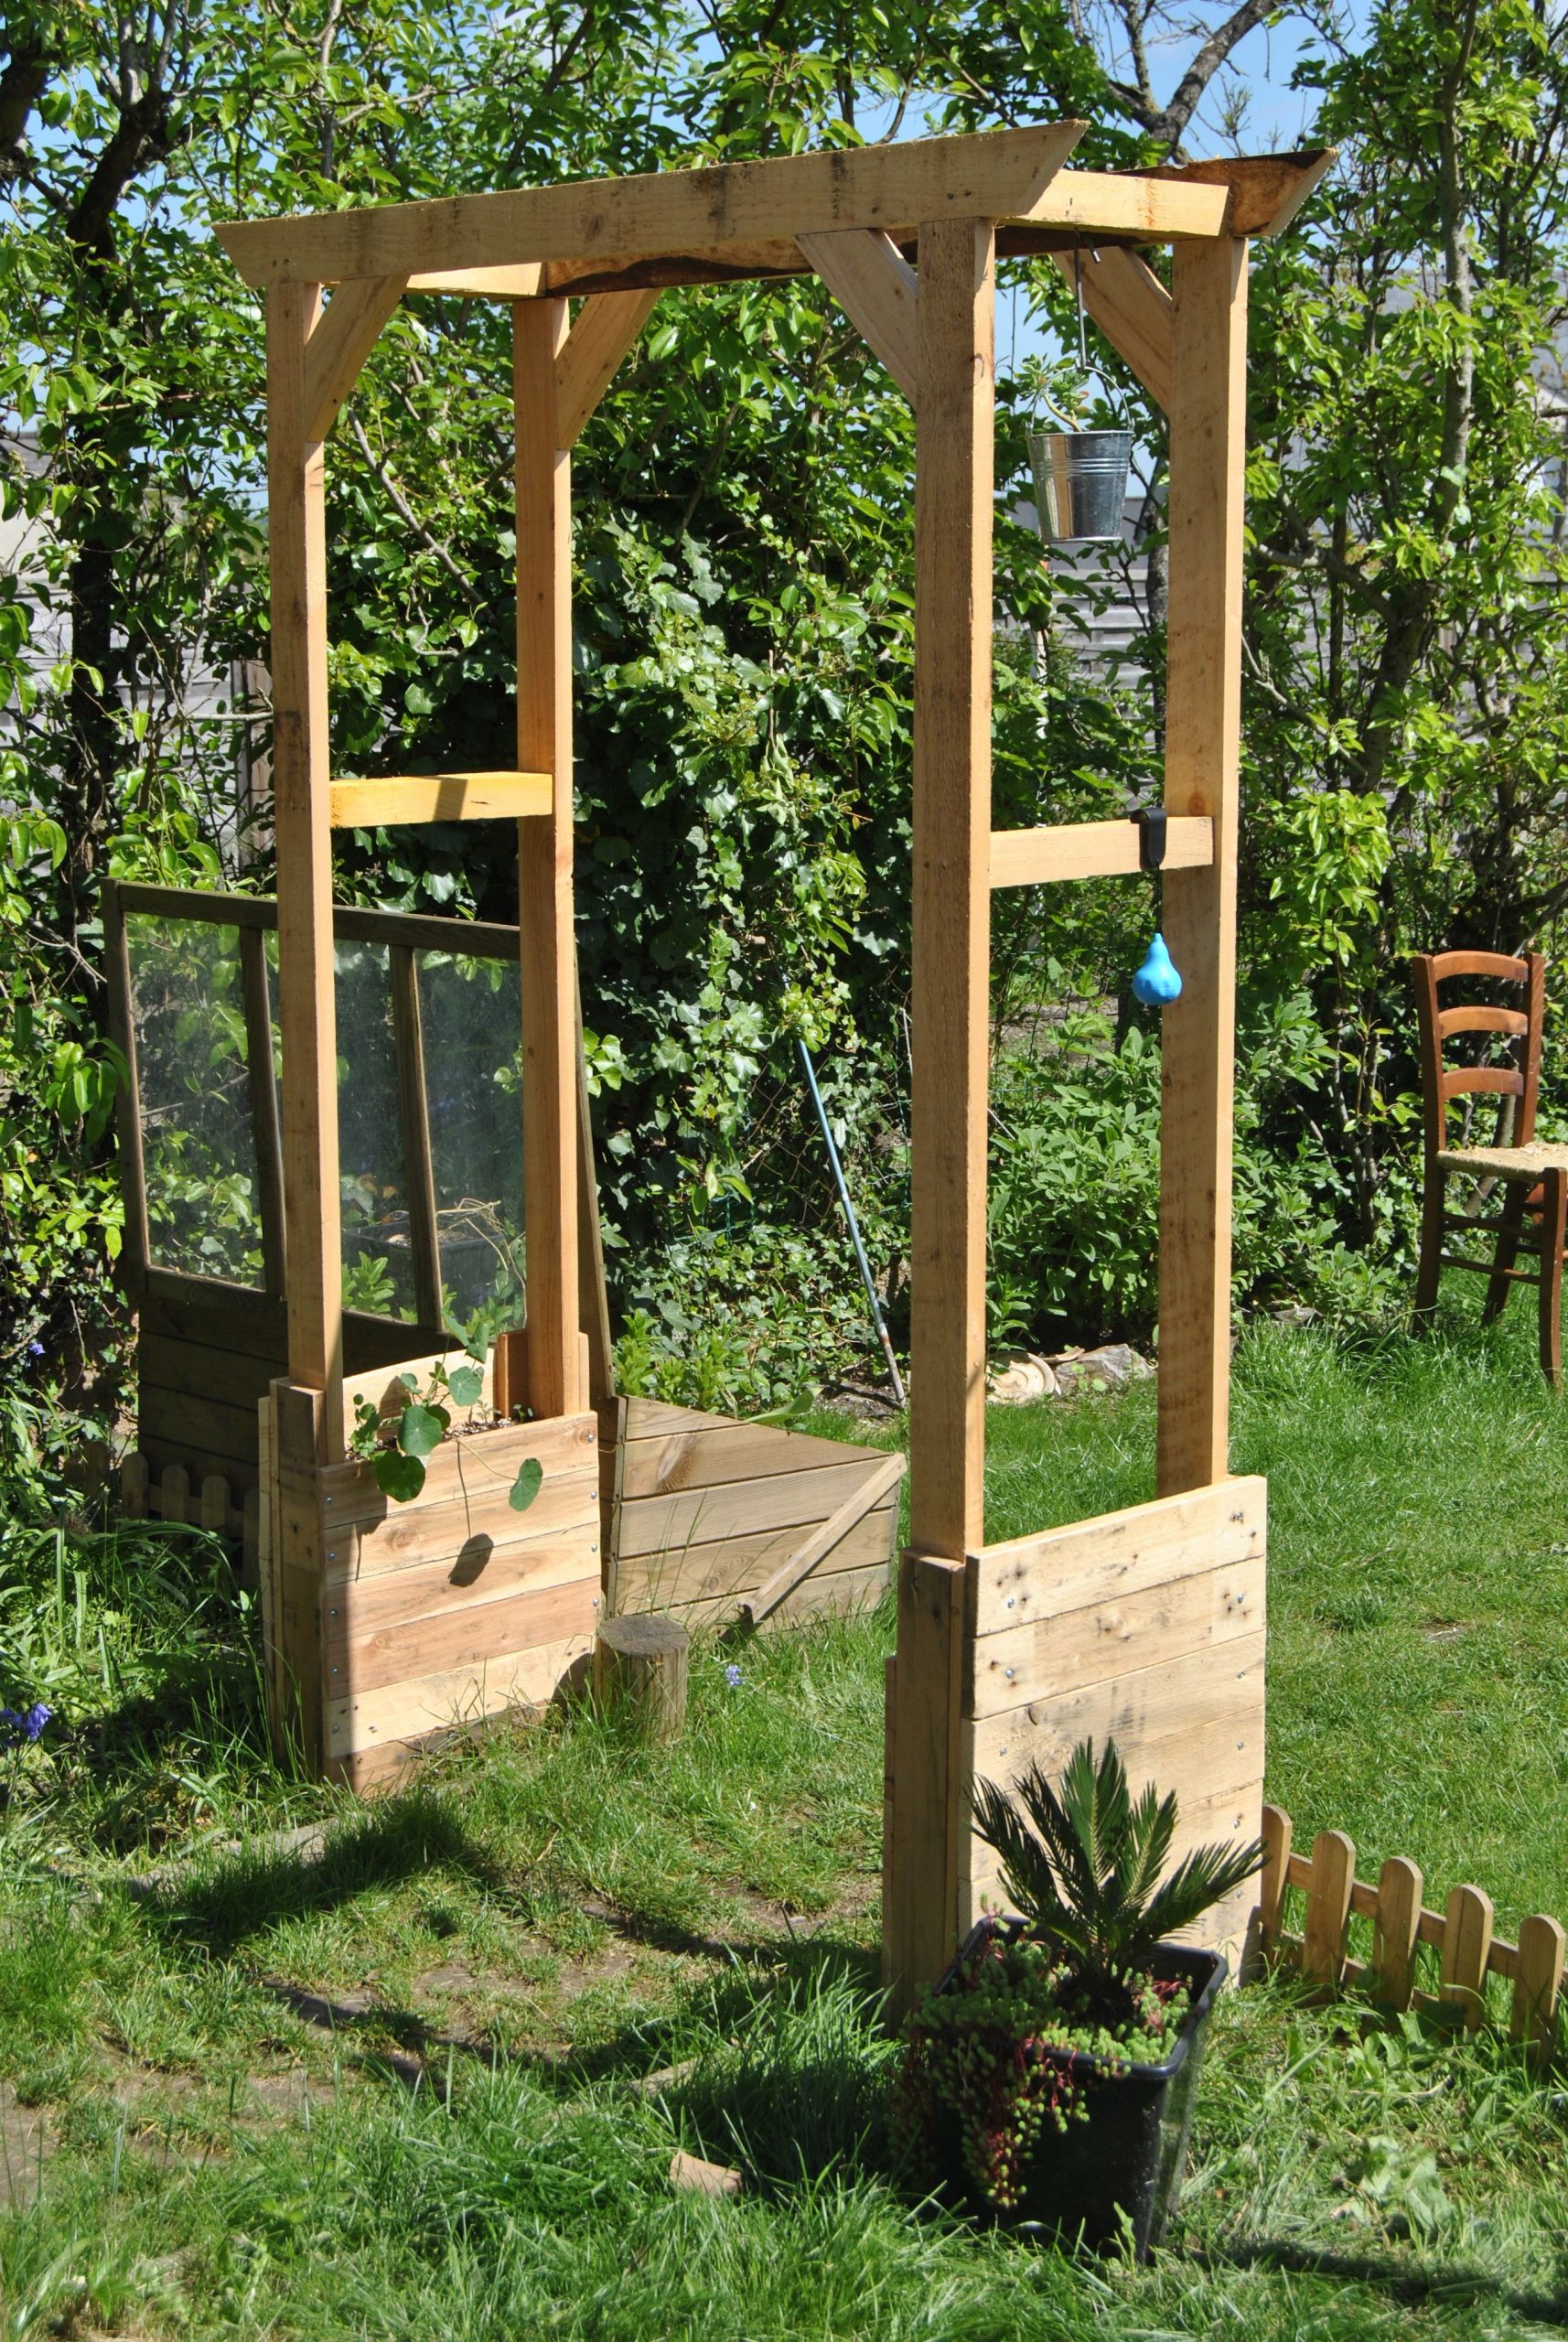 All About Diy. The Magazine For Home &amp; Garden. | Bosch Diy ... concernant Arche De Jardin En Bois